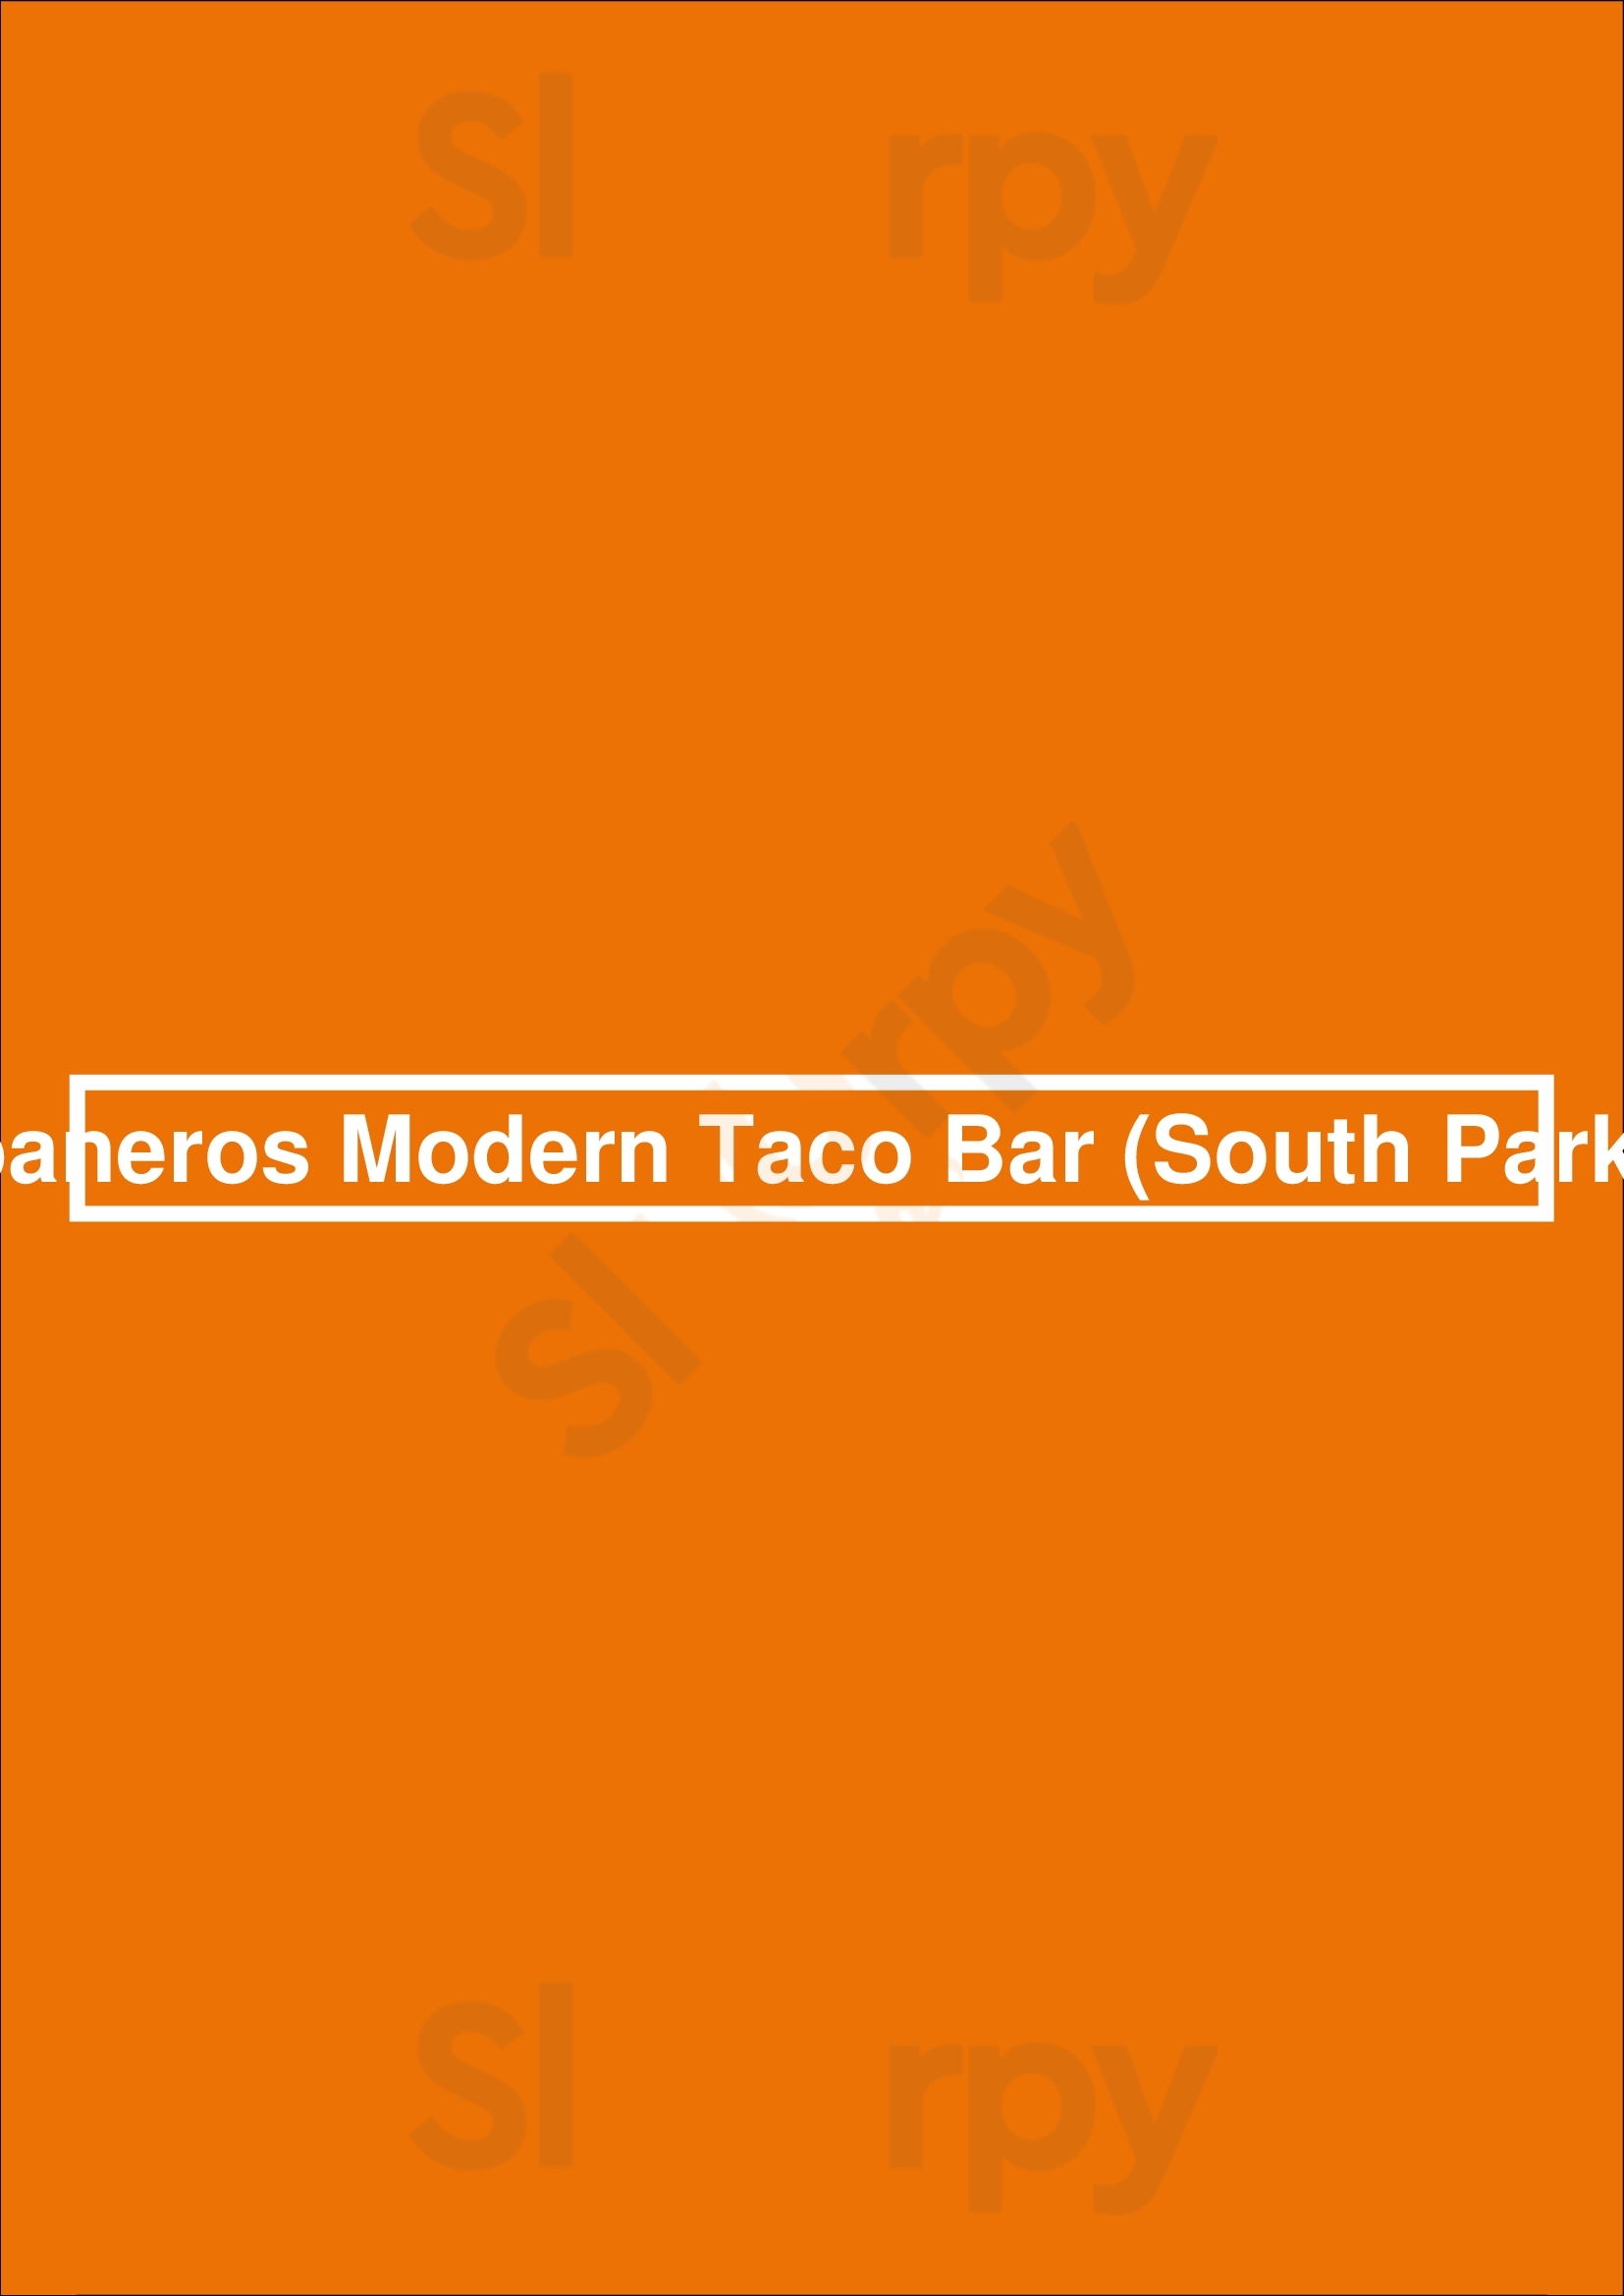 Habaneros Modern Taco Bar Halifax Menu - 1